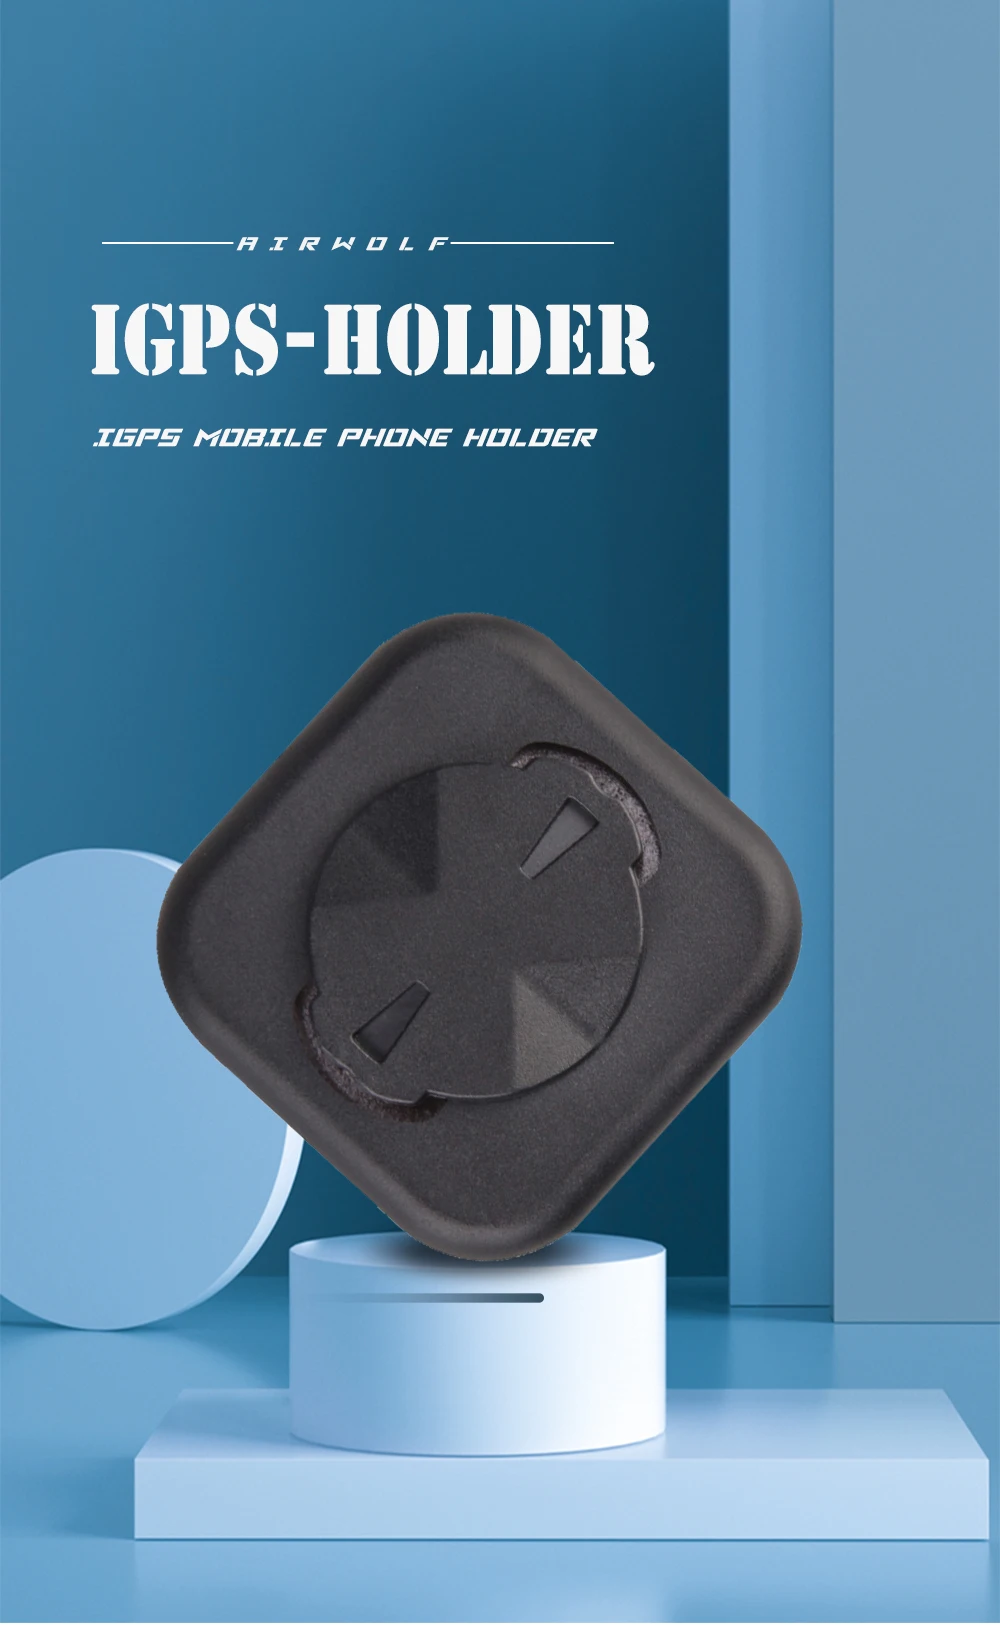 Back Button Phone Mount Stopwatch Holder Adapter For Garmin Universal Brand New 